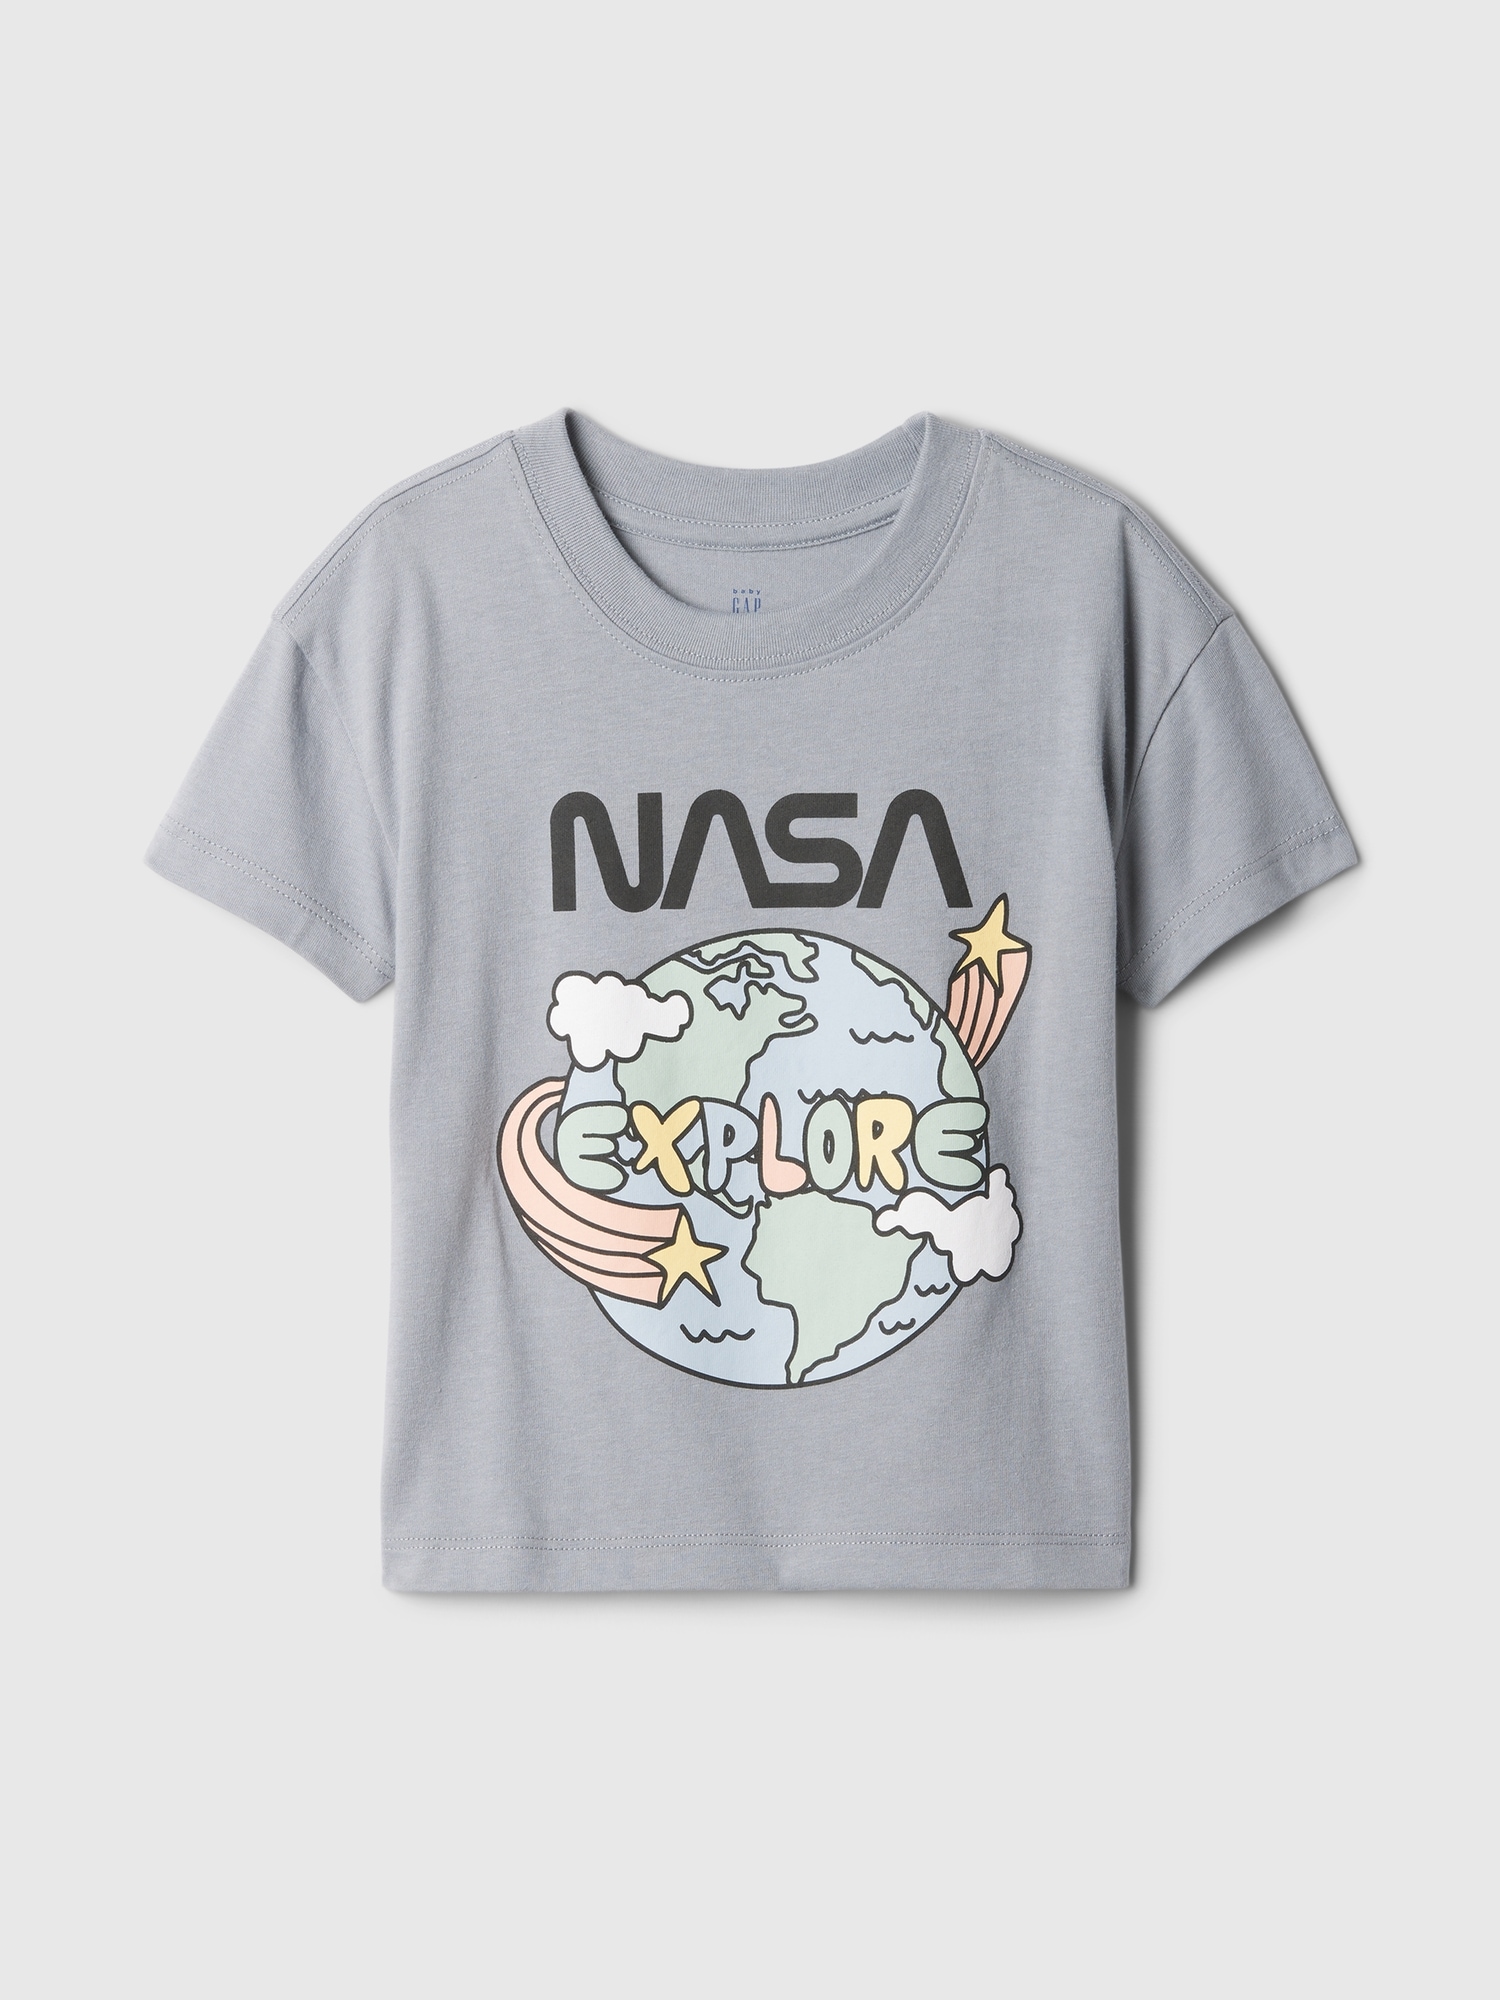 Toddler NASA Graphic T-Shirt